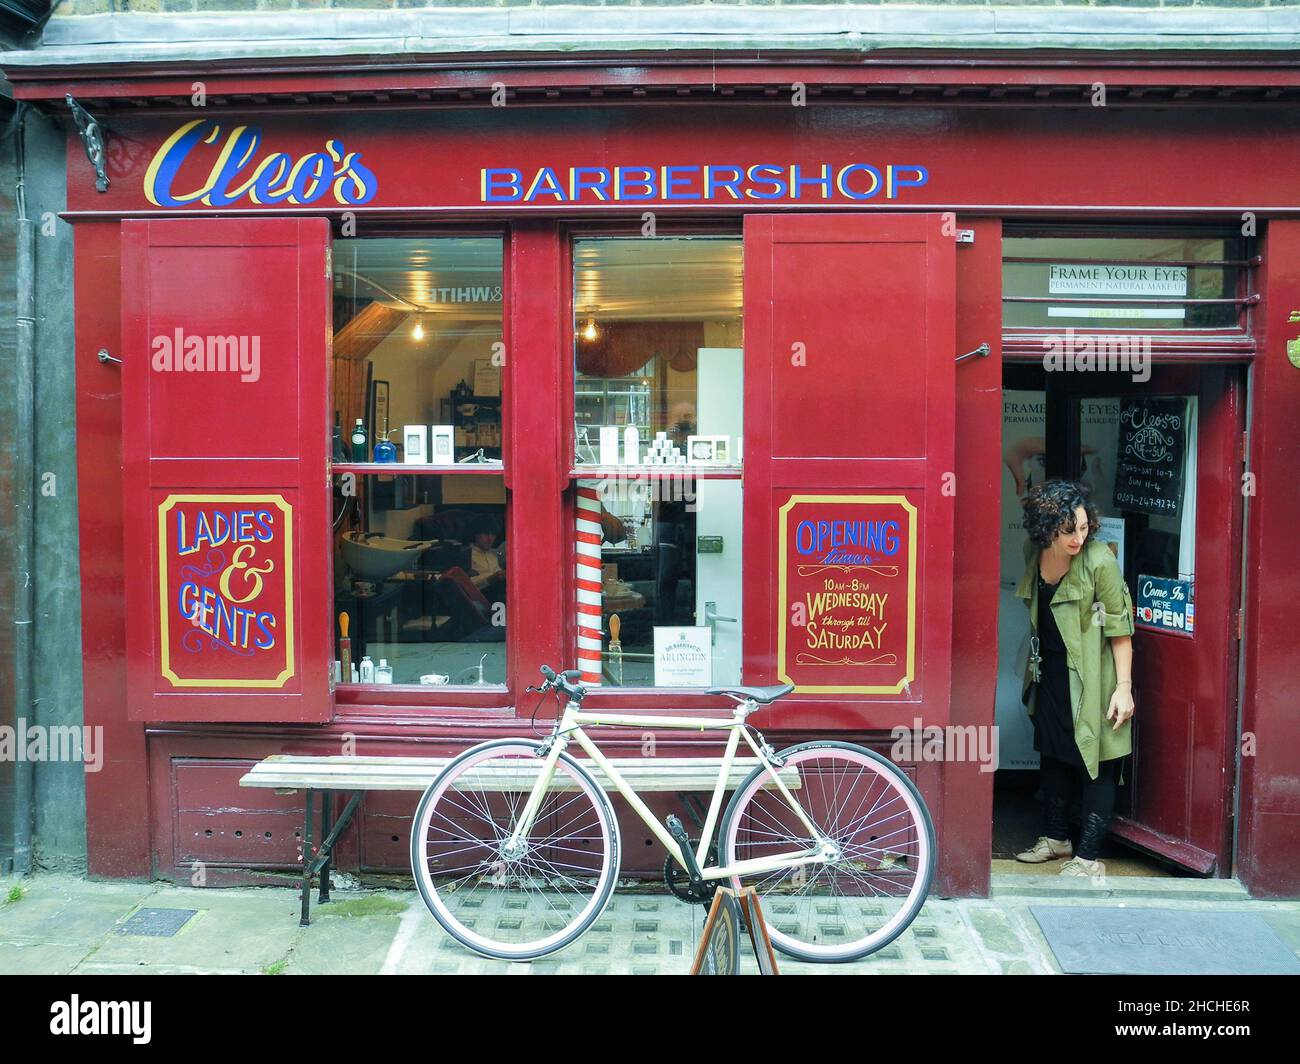 Cleo's Barbers Shop, Puma Court, Spitalfields, London, England, U.K. Stock Photo